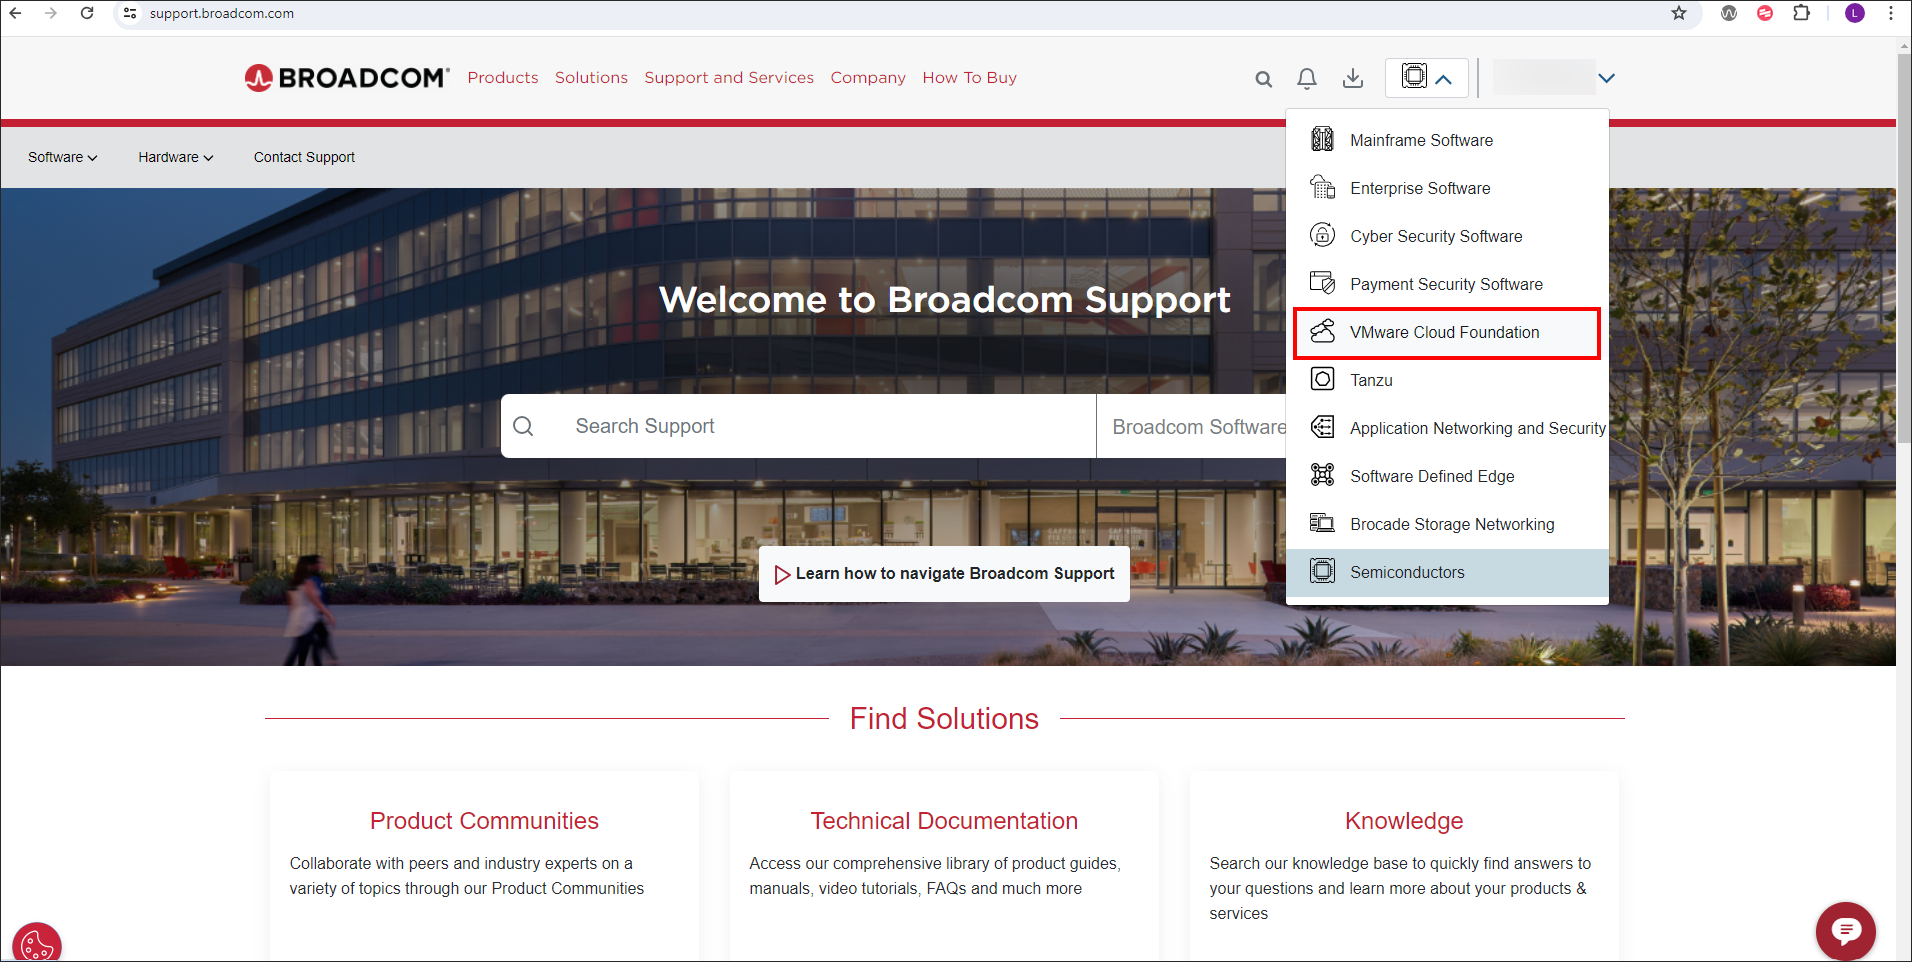 Broadcom VMware Cloud Foundation selection